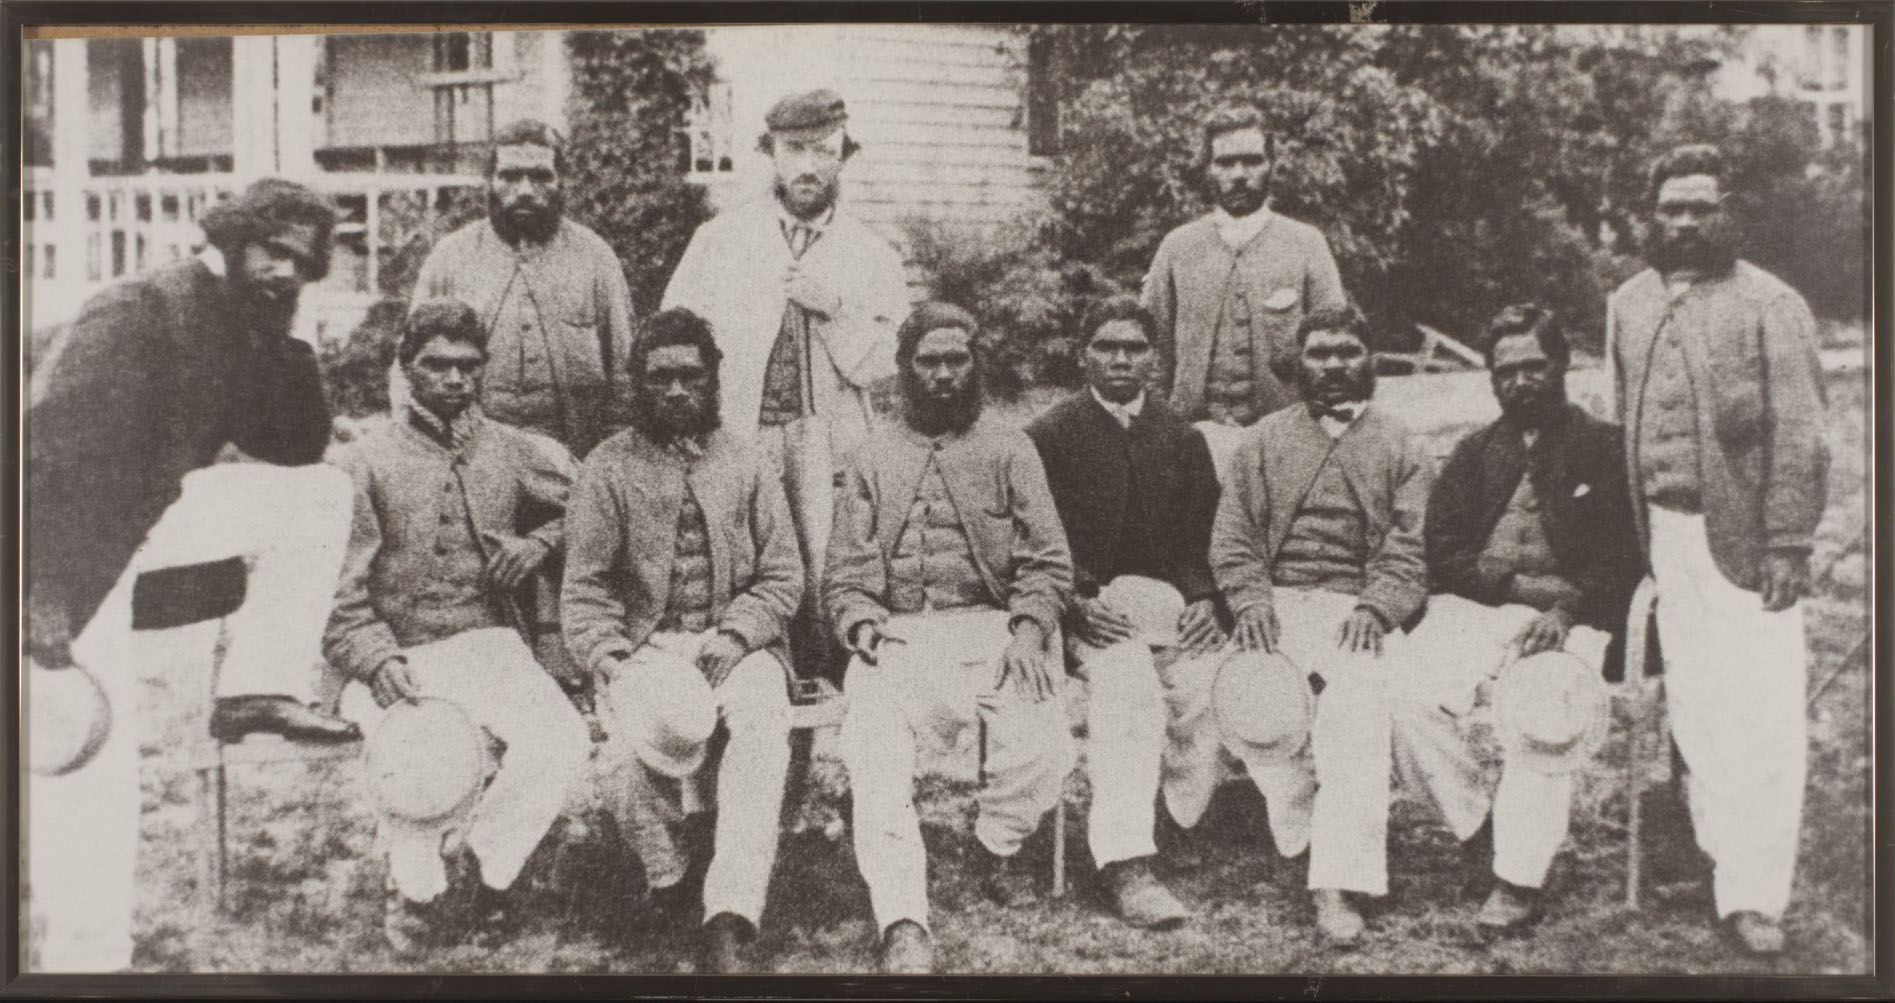 An Aboriginal cricket team, 1866.